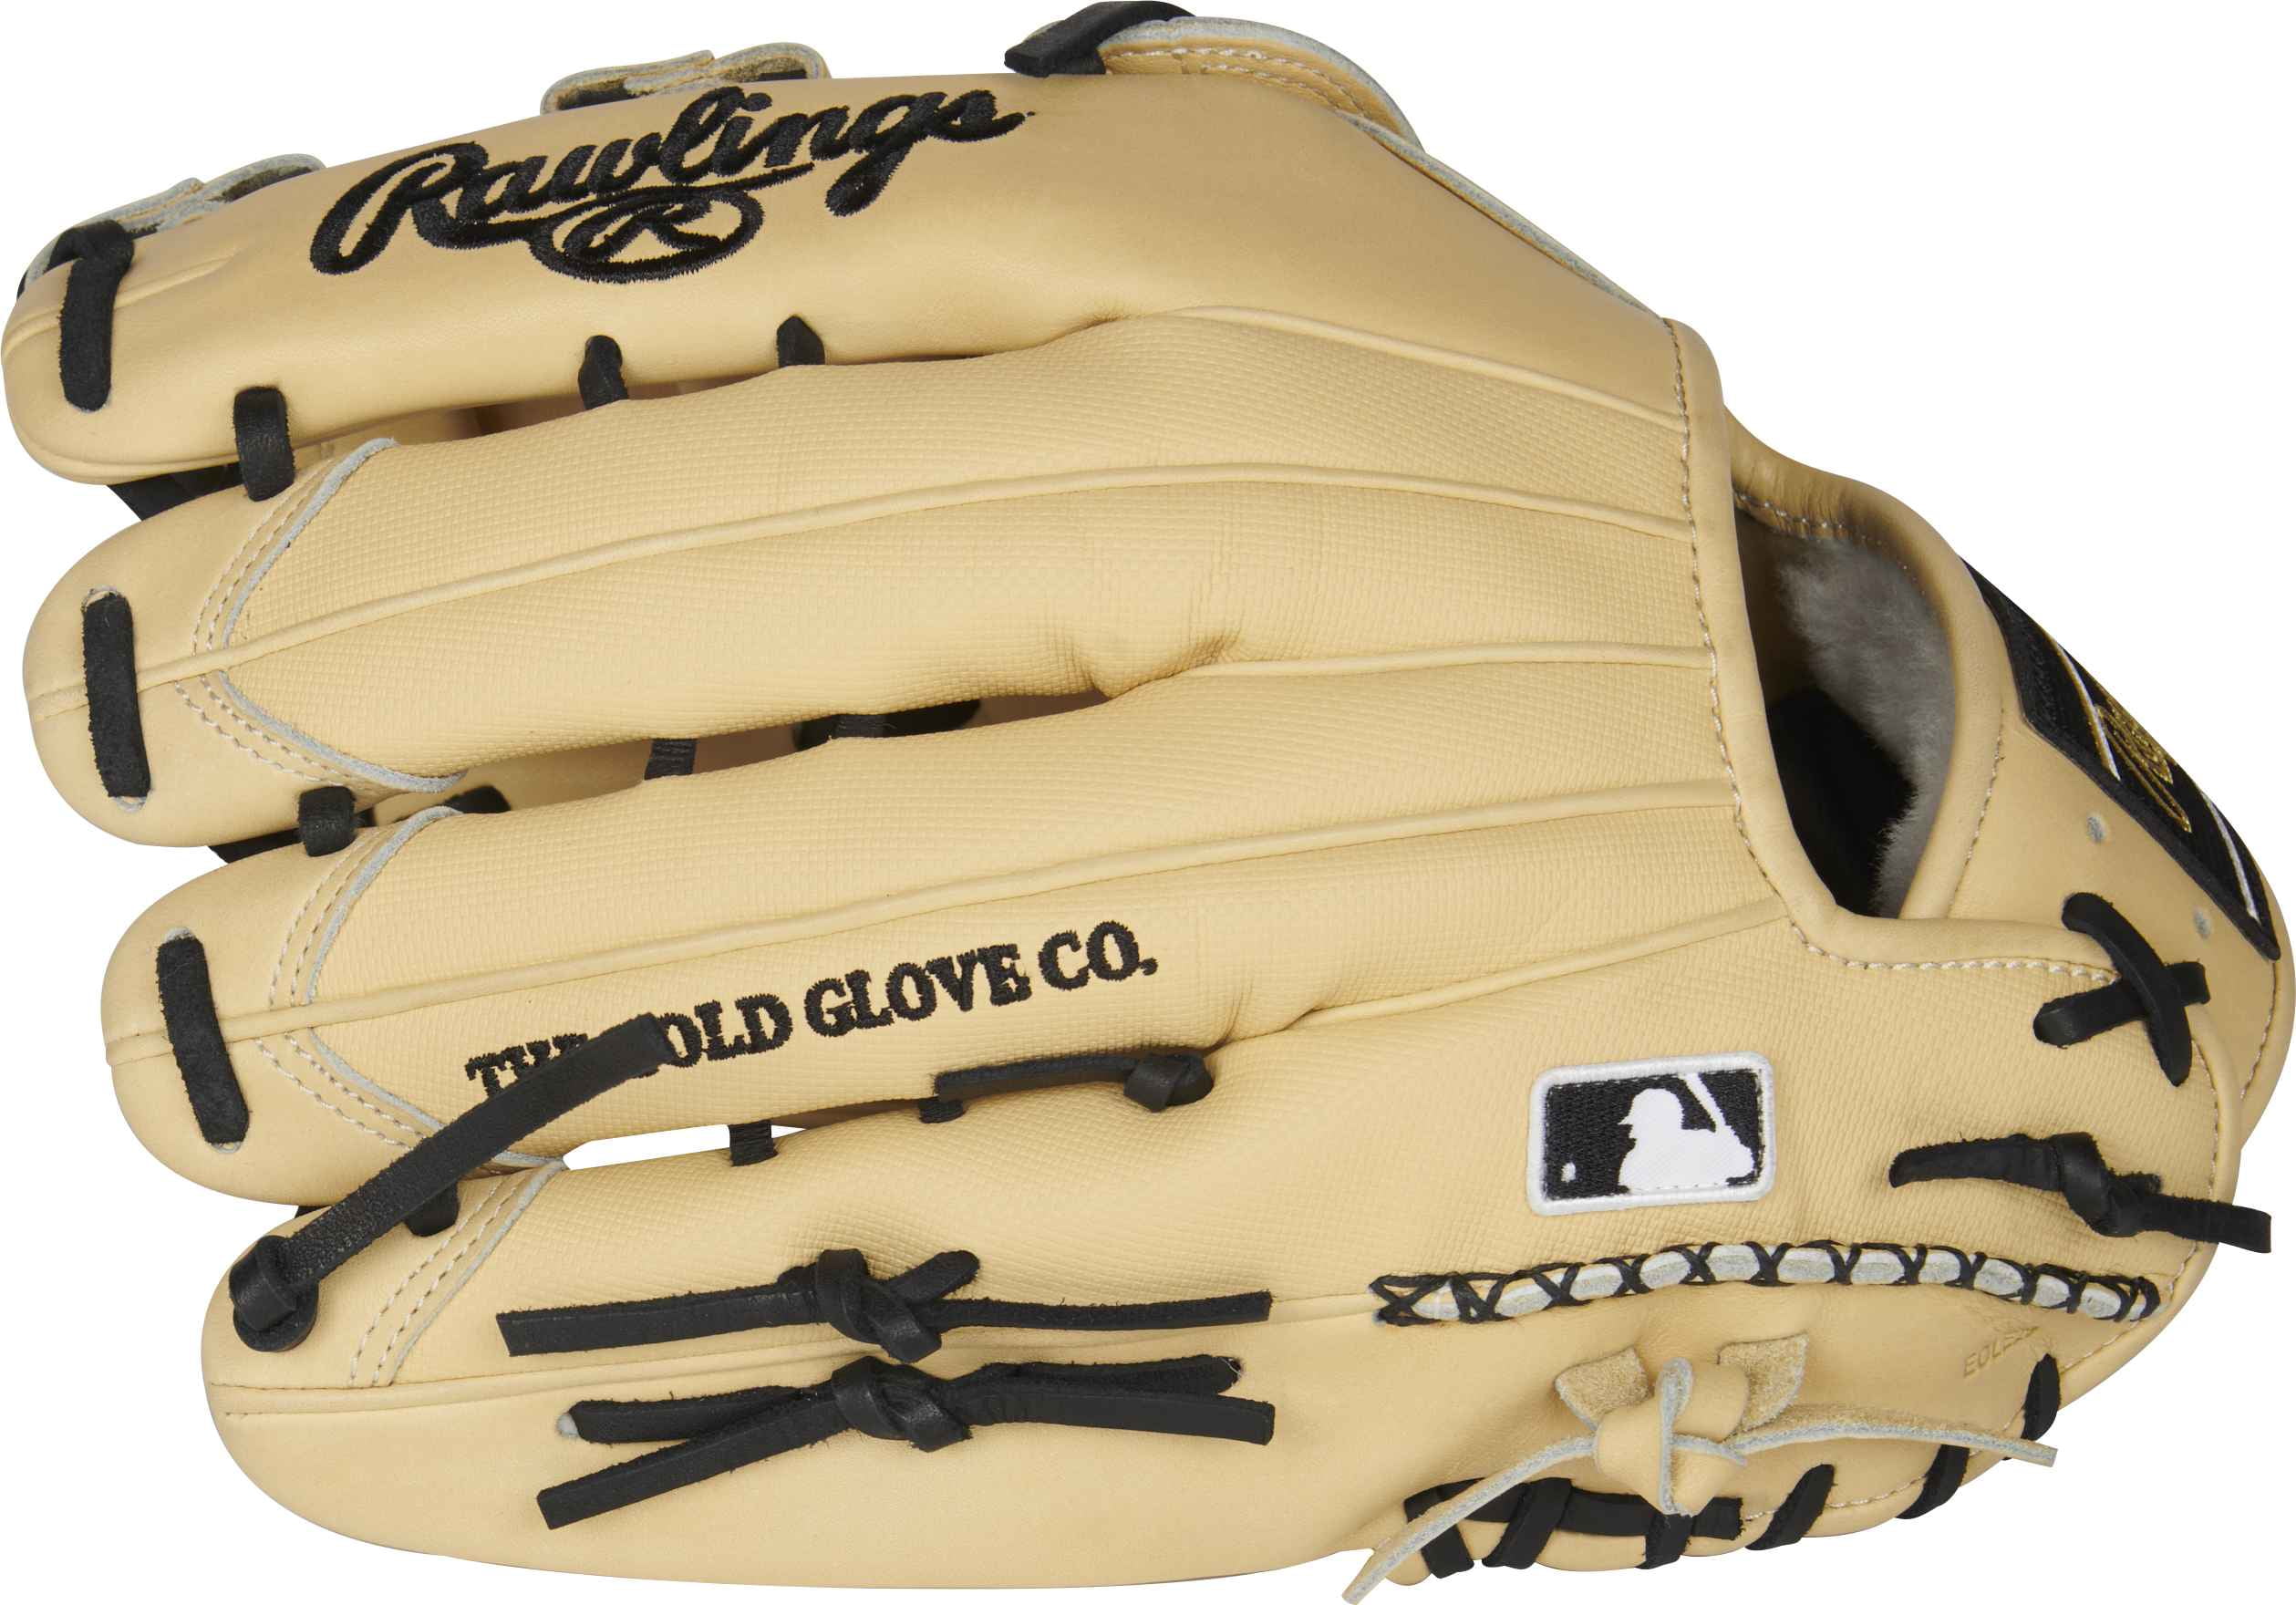 Rawlings Pro Preferred Ronald Acuna Jr. 12.75 Baseball Glove (PROSRA13)